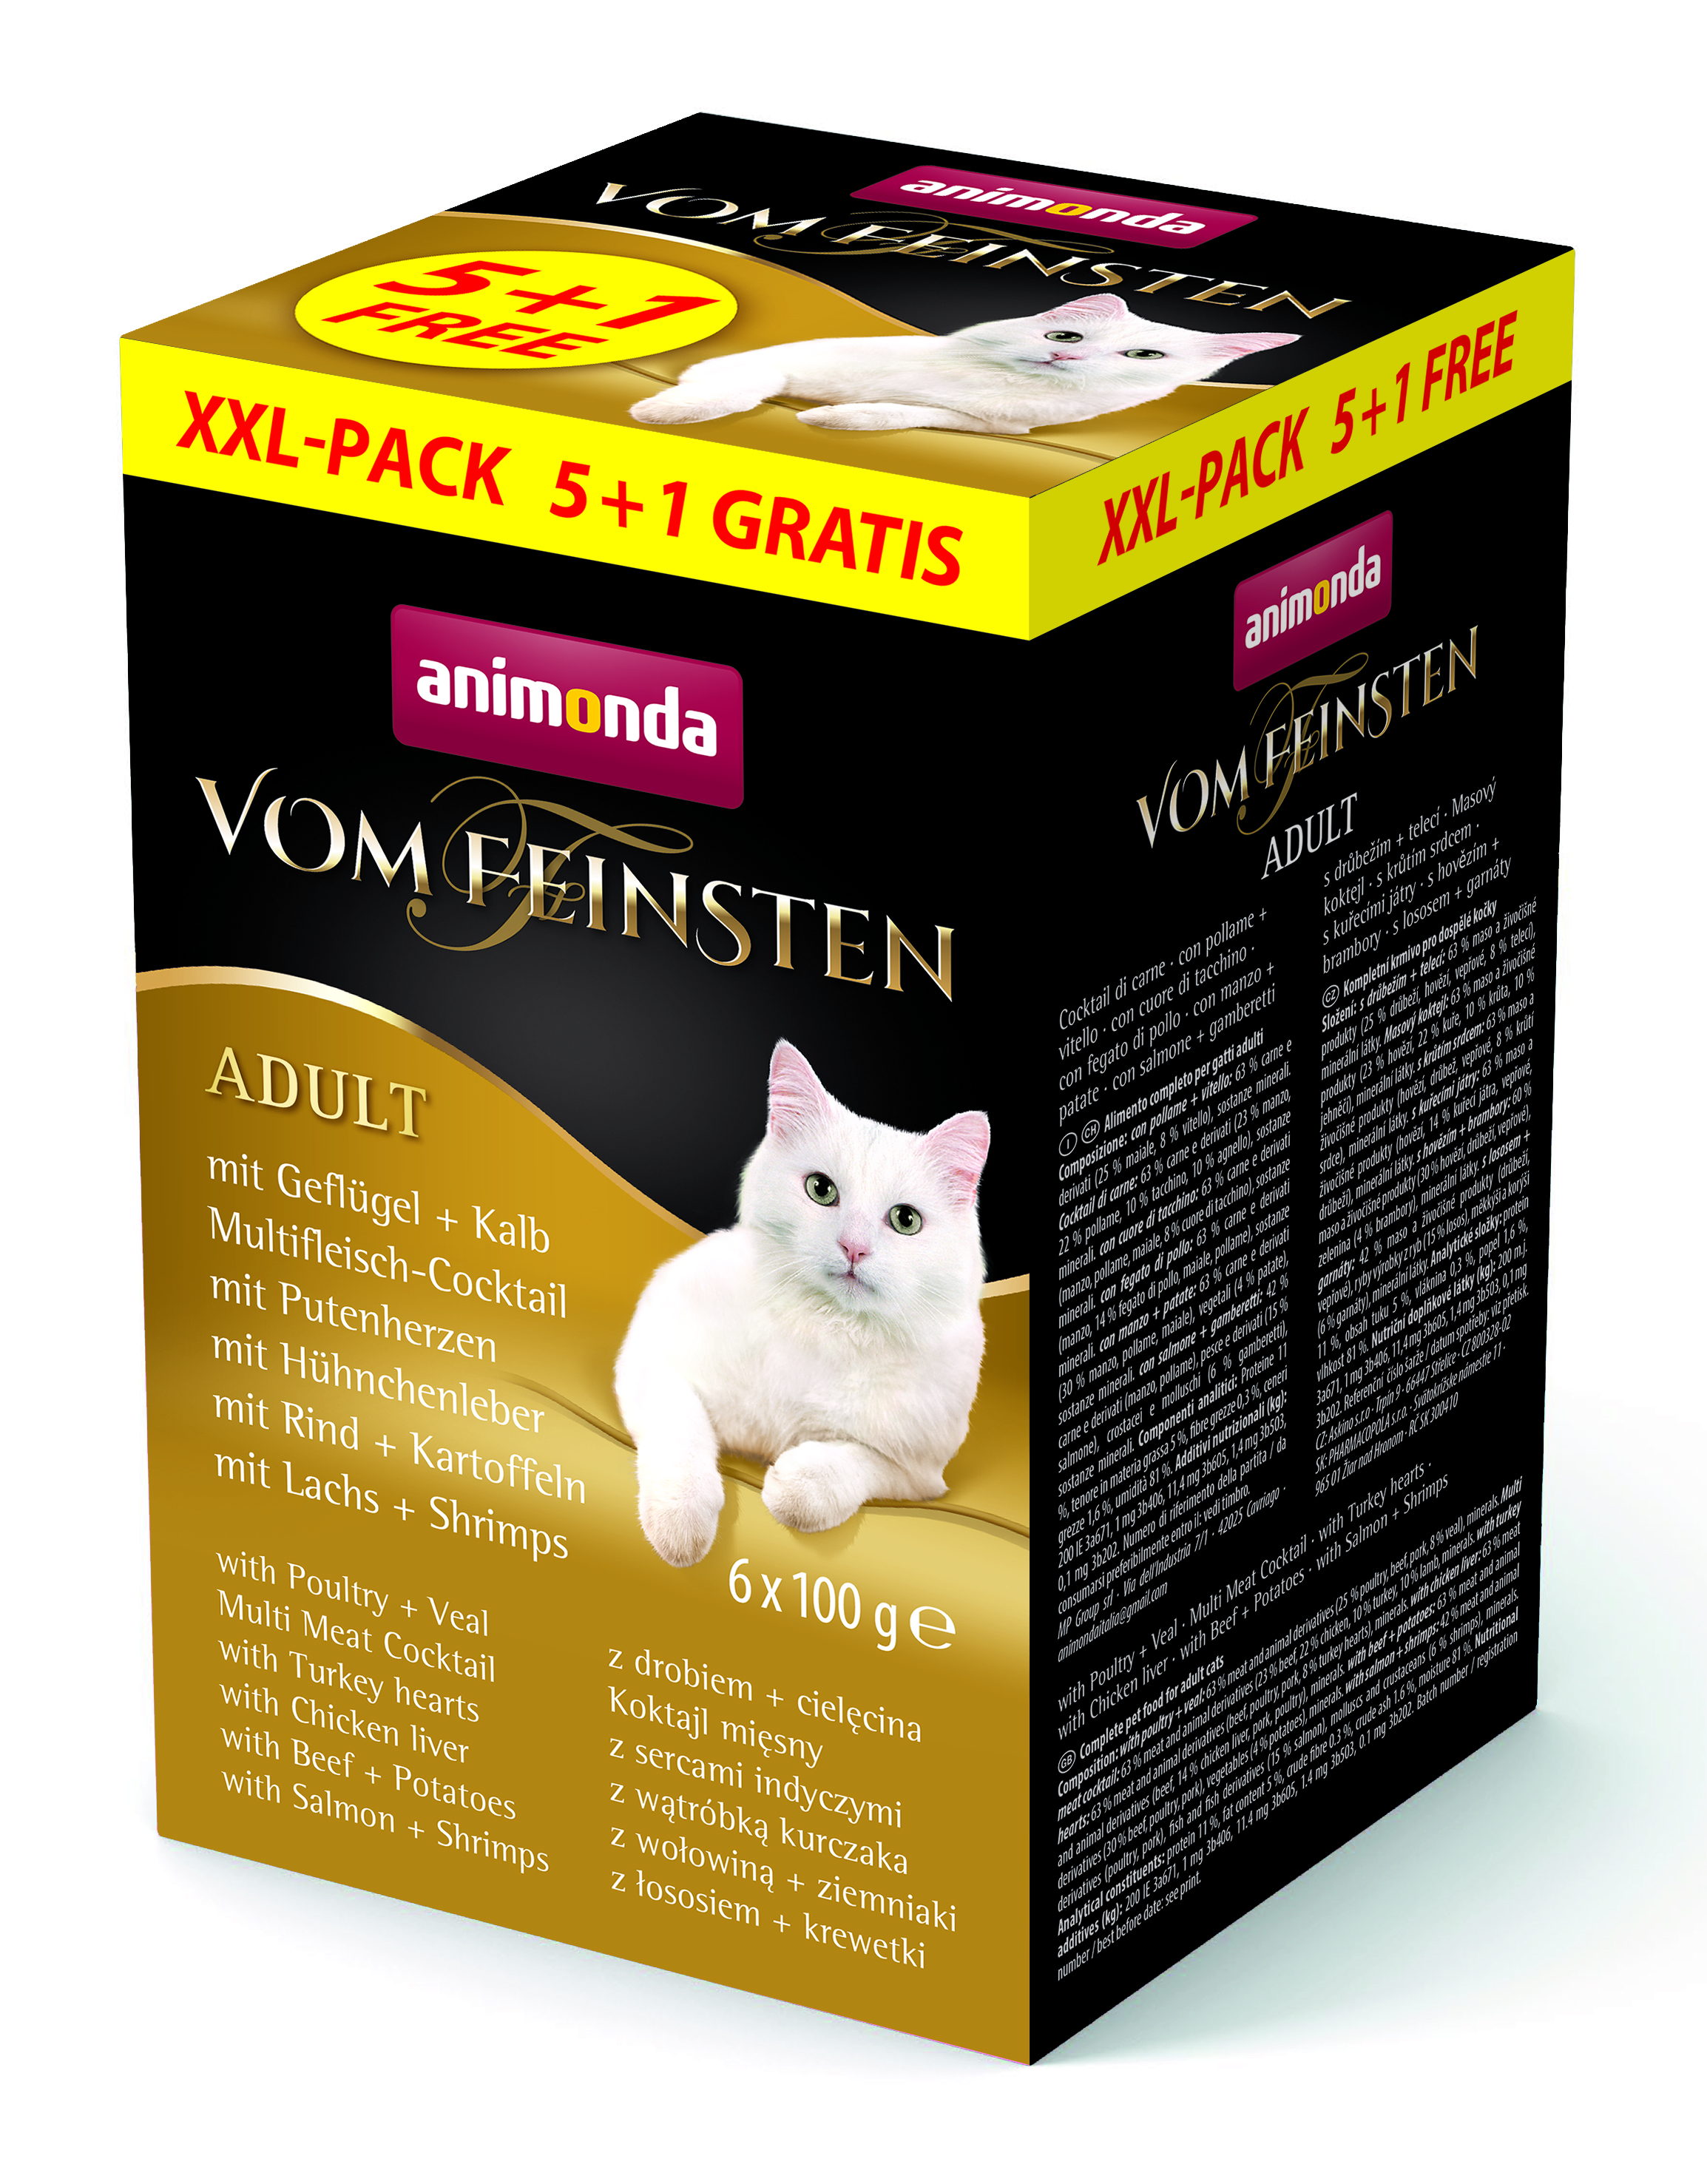 Пастети за котка Animonda Vom Feinsten XXl 5+1 ПОДАРЪК, кутия